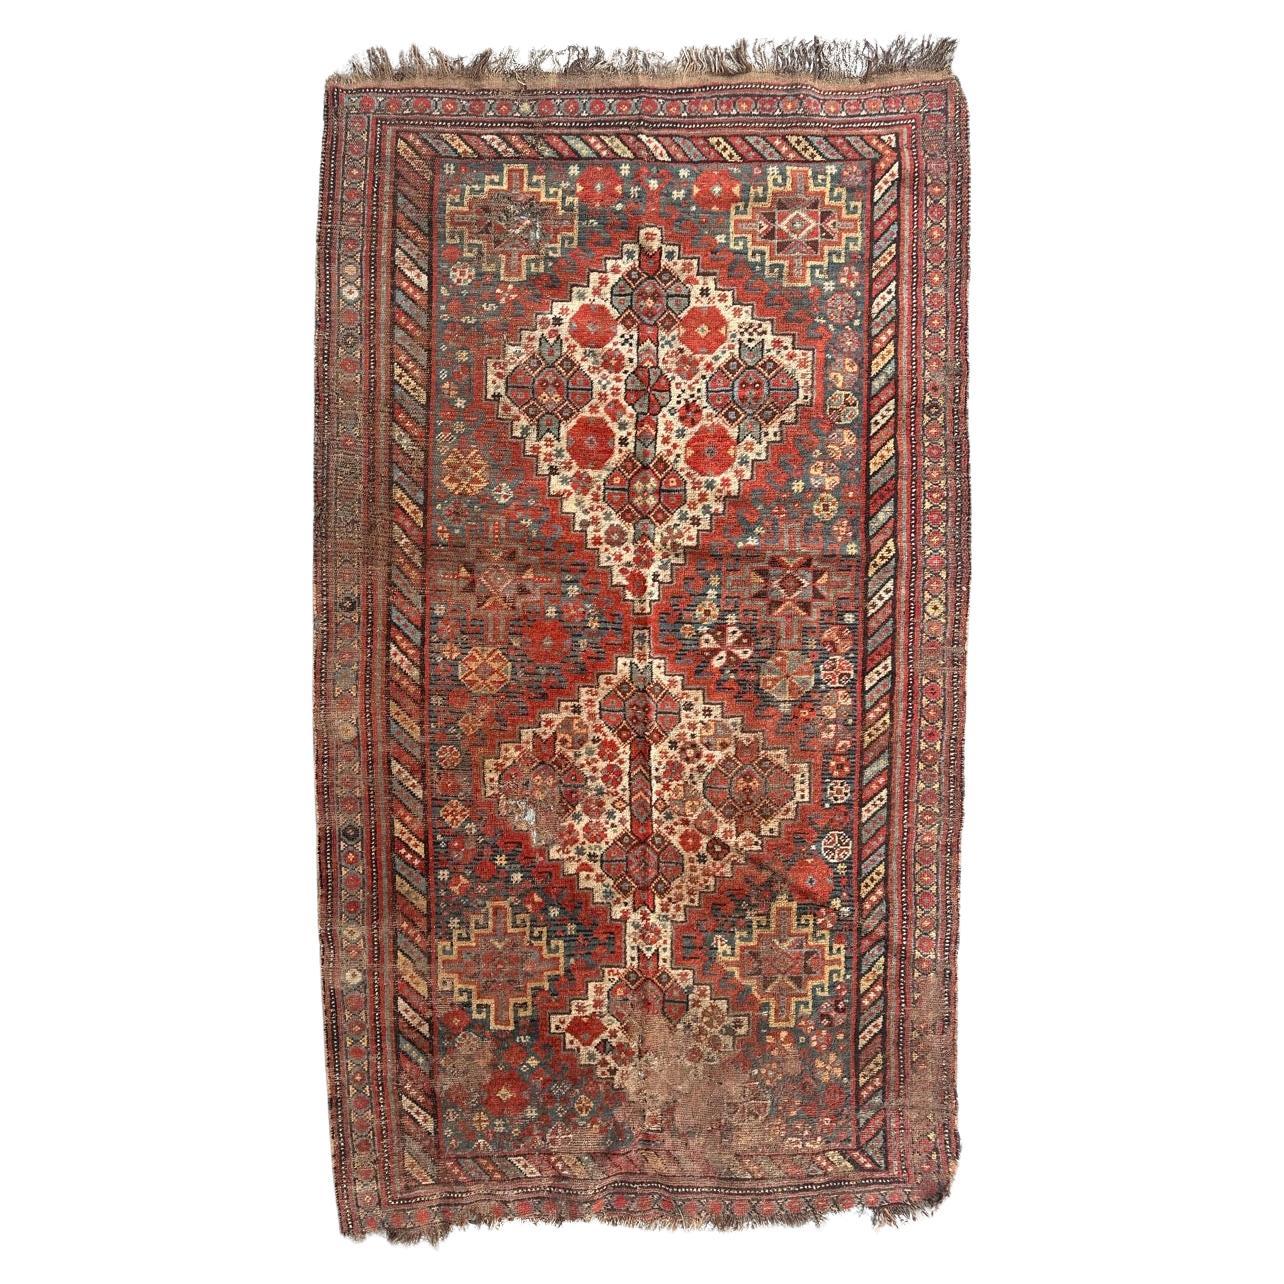 Bobyrug’s distressed antique Shiraz rug